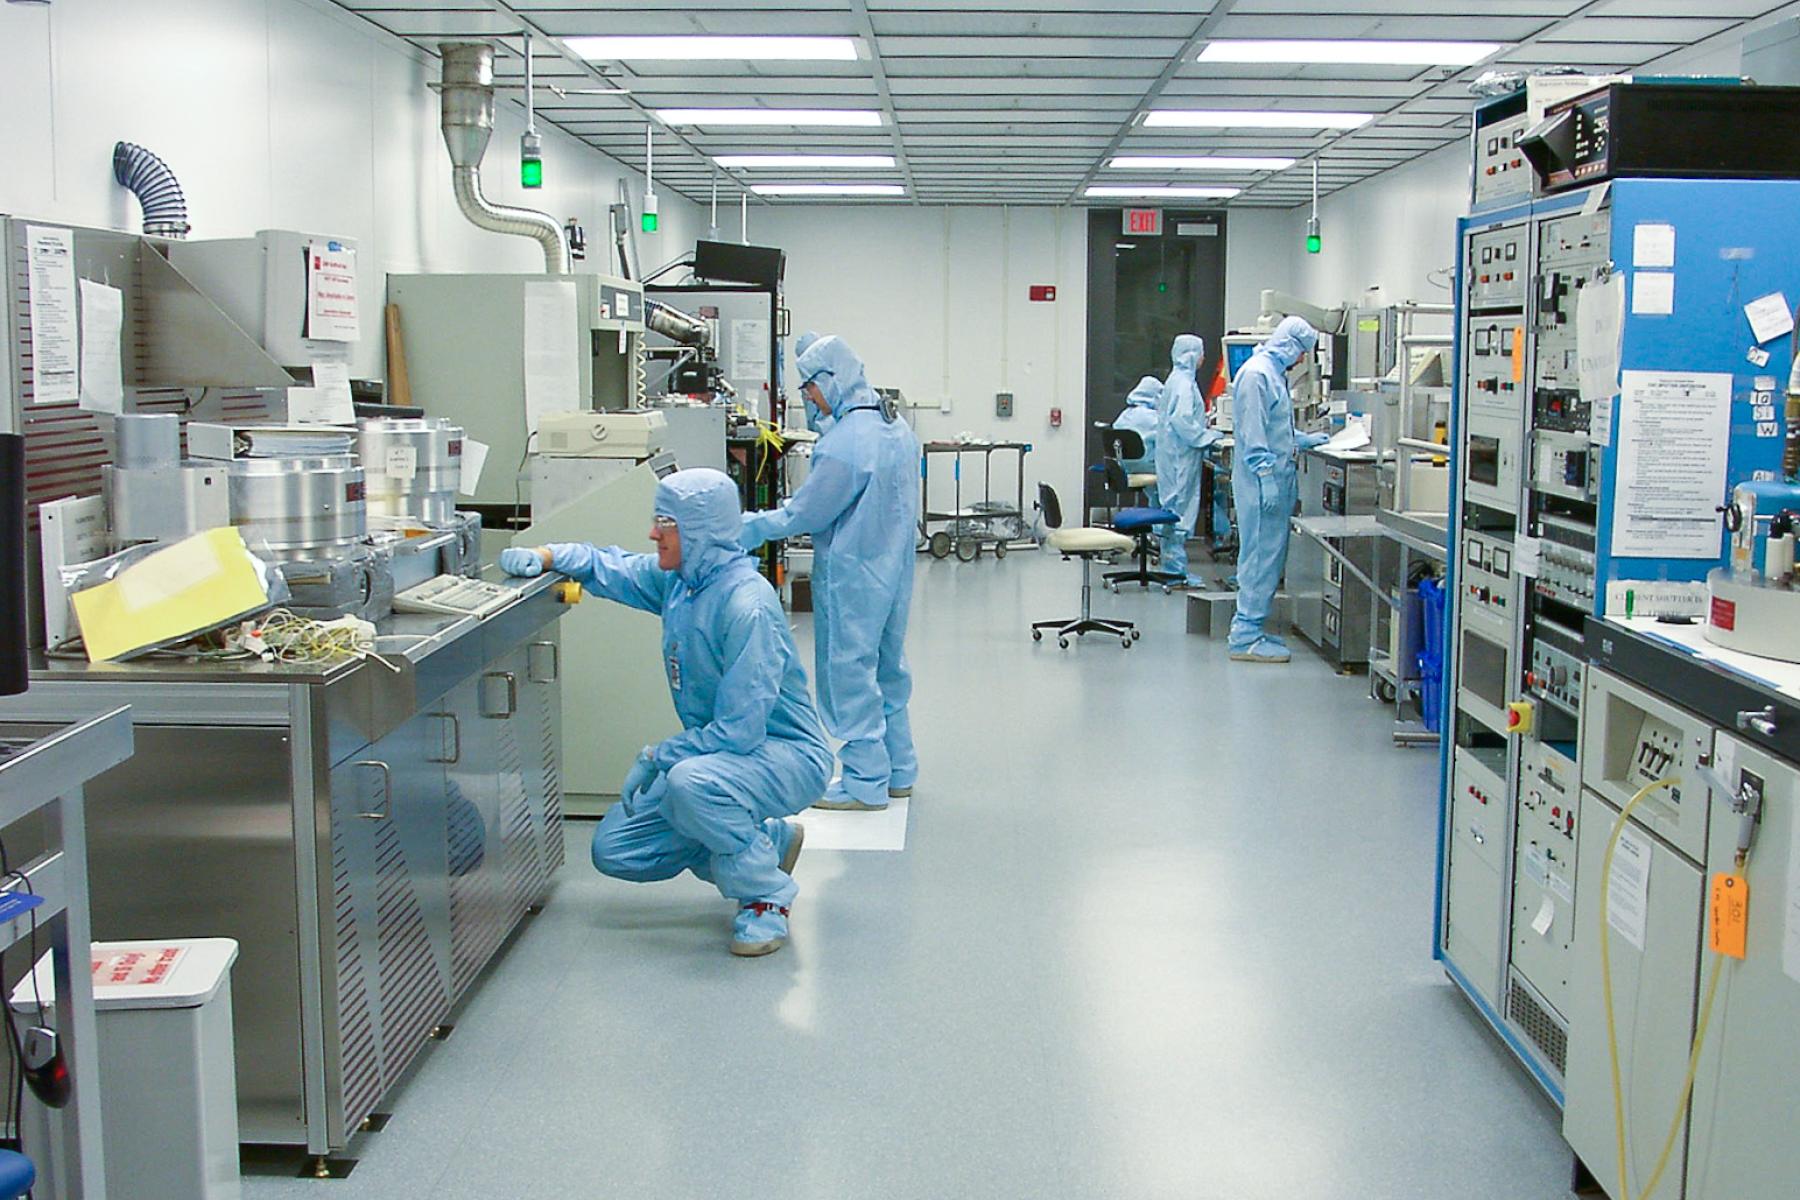 Scientific Image - Cornell Nanoscientists in clean room